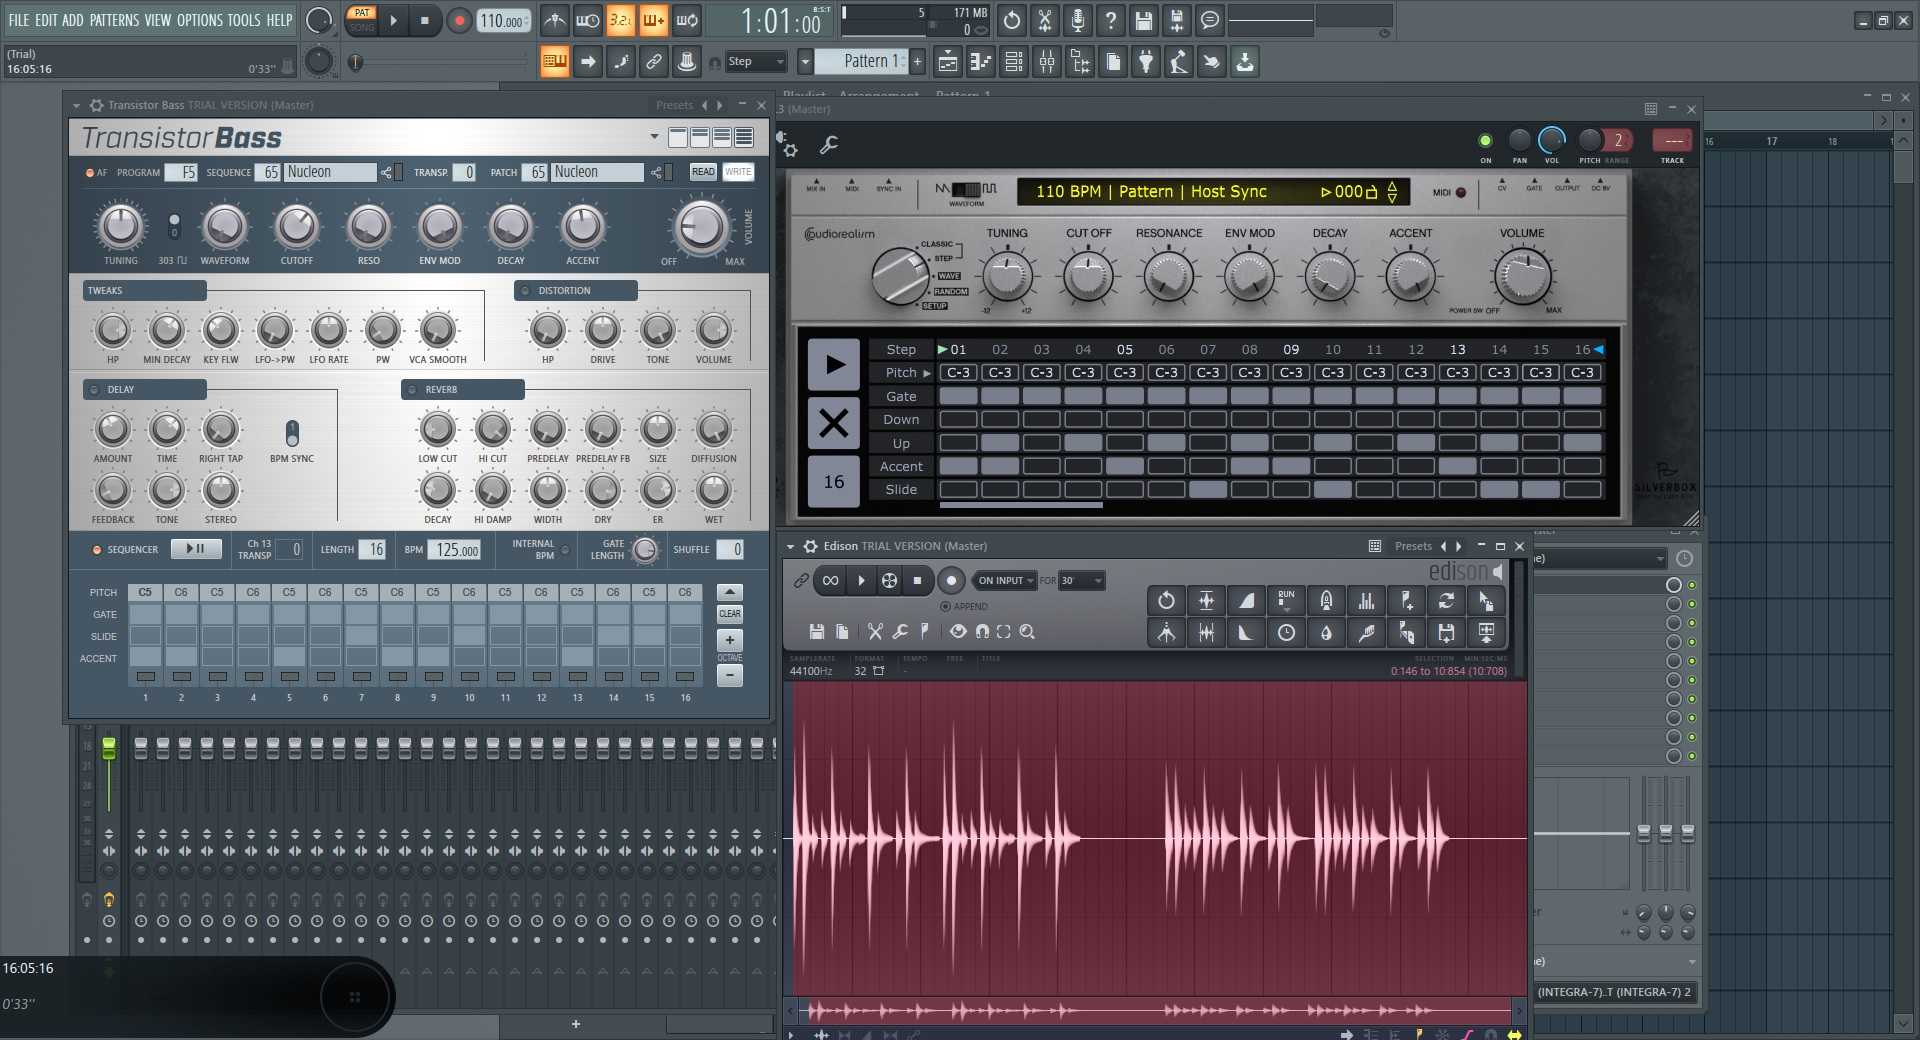 Waves tune fl studio 20. FL Studio 20 студия. Плагины для FL Studio 20. Фл студио Интерфейс. Плагины для фл студио 20.